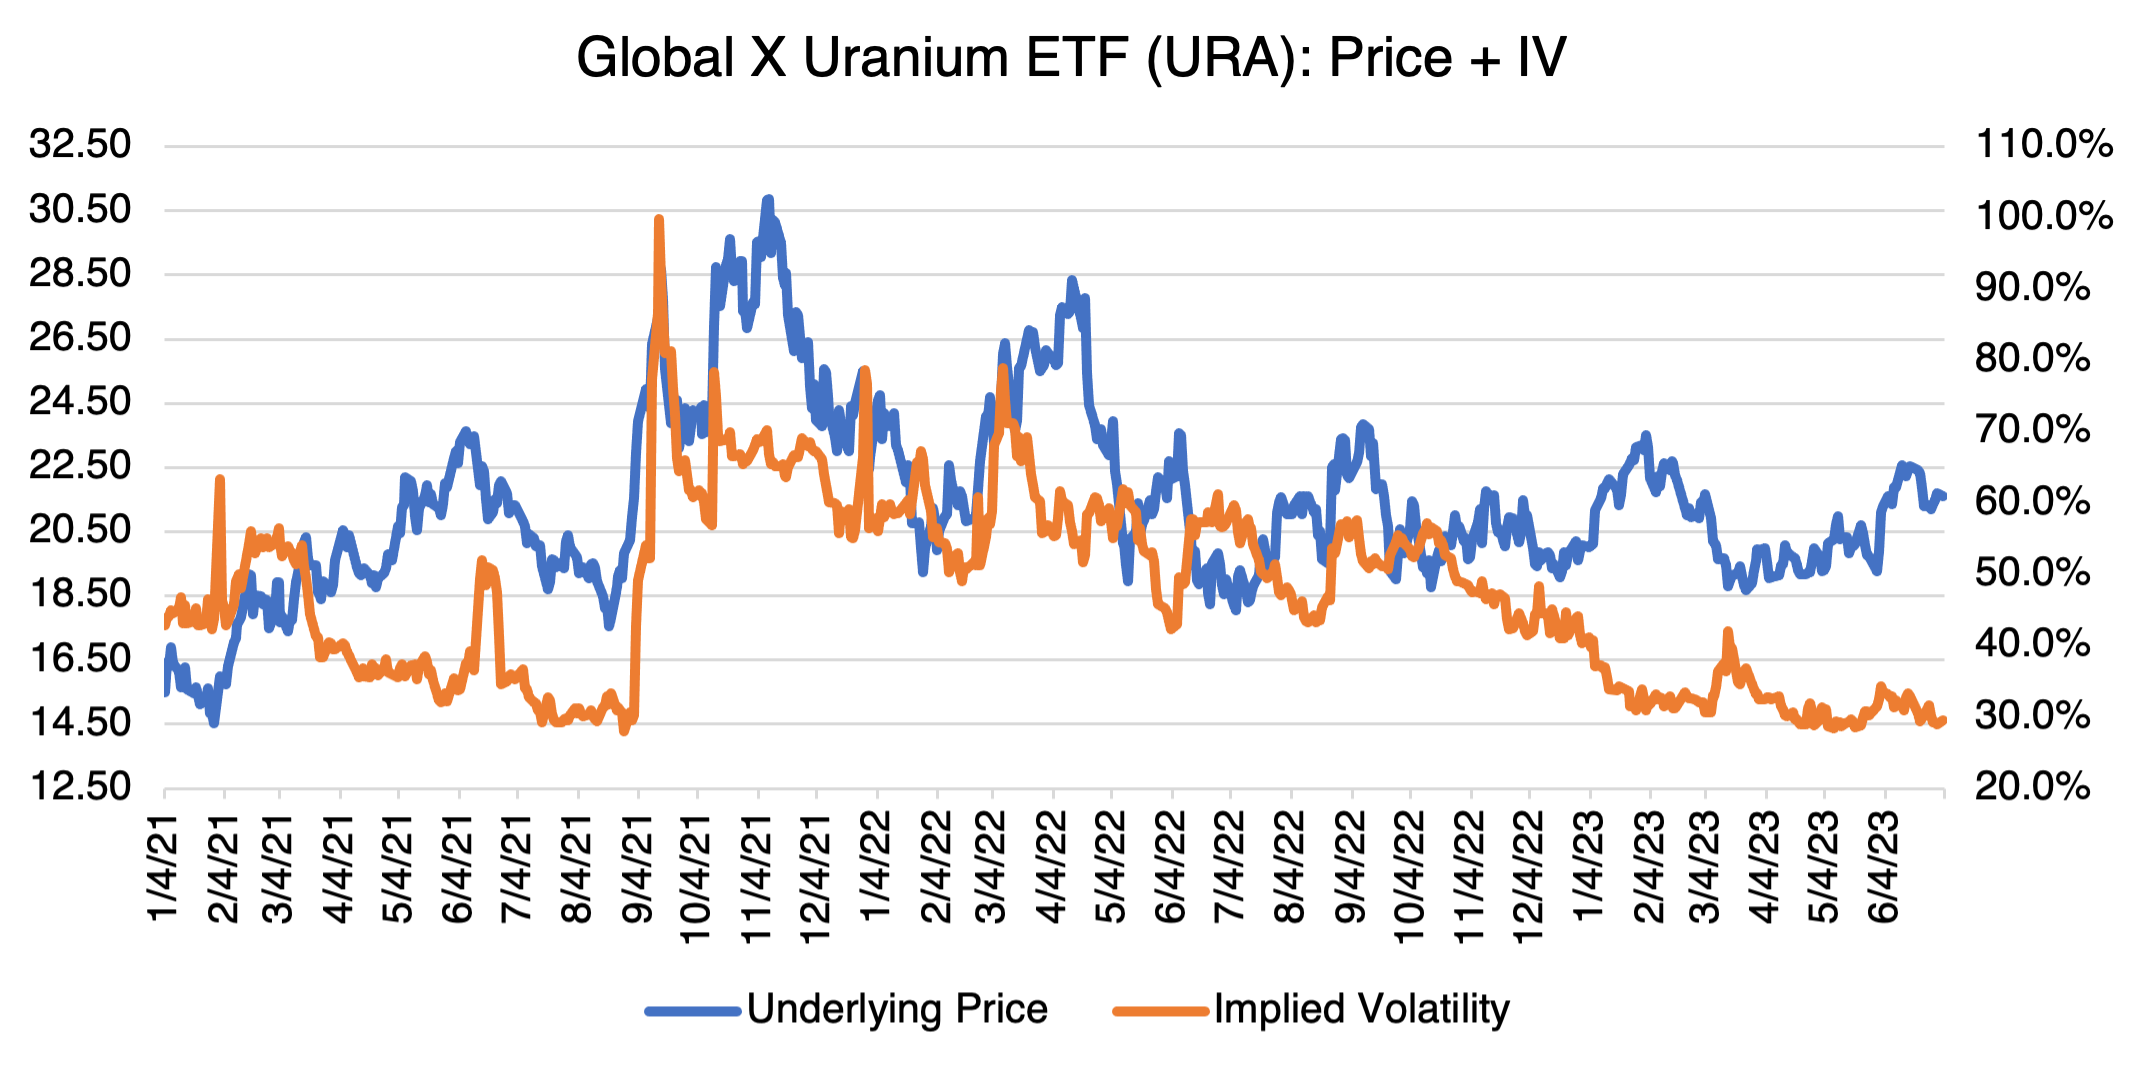 Global X Uranium ETF (URA): Price + IV